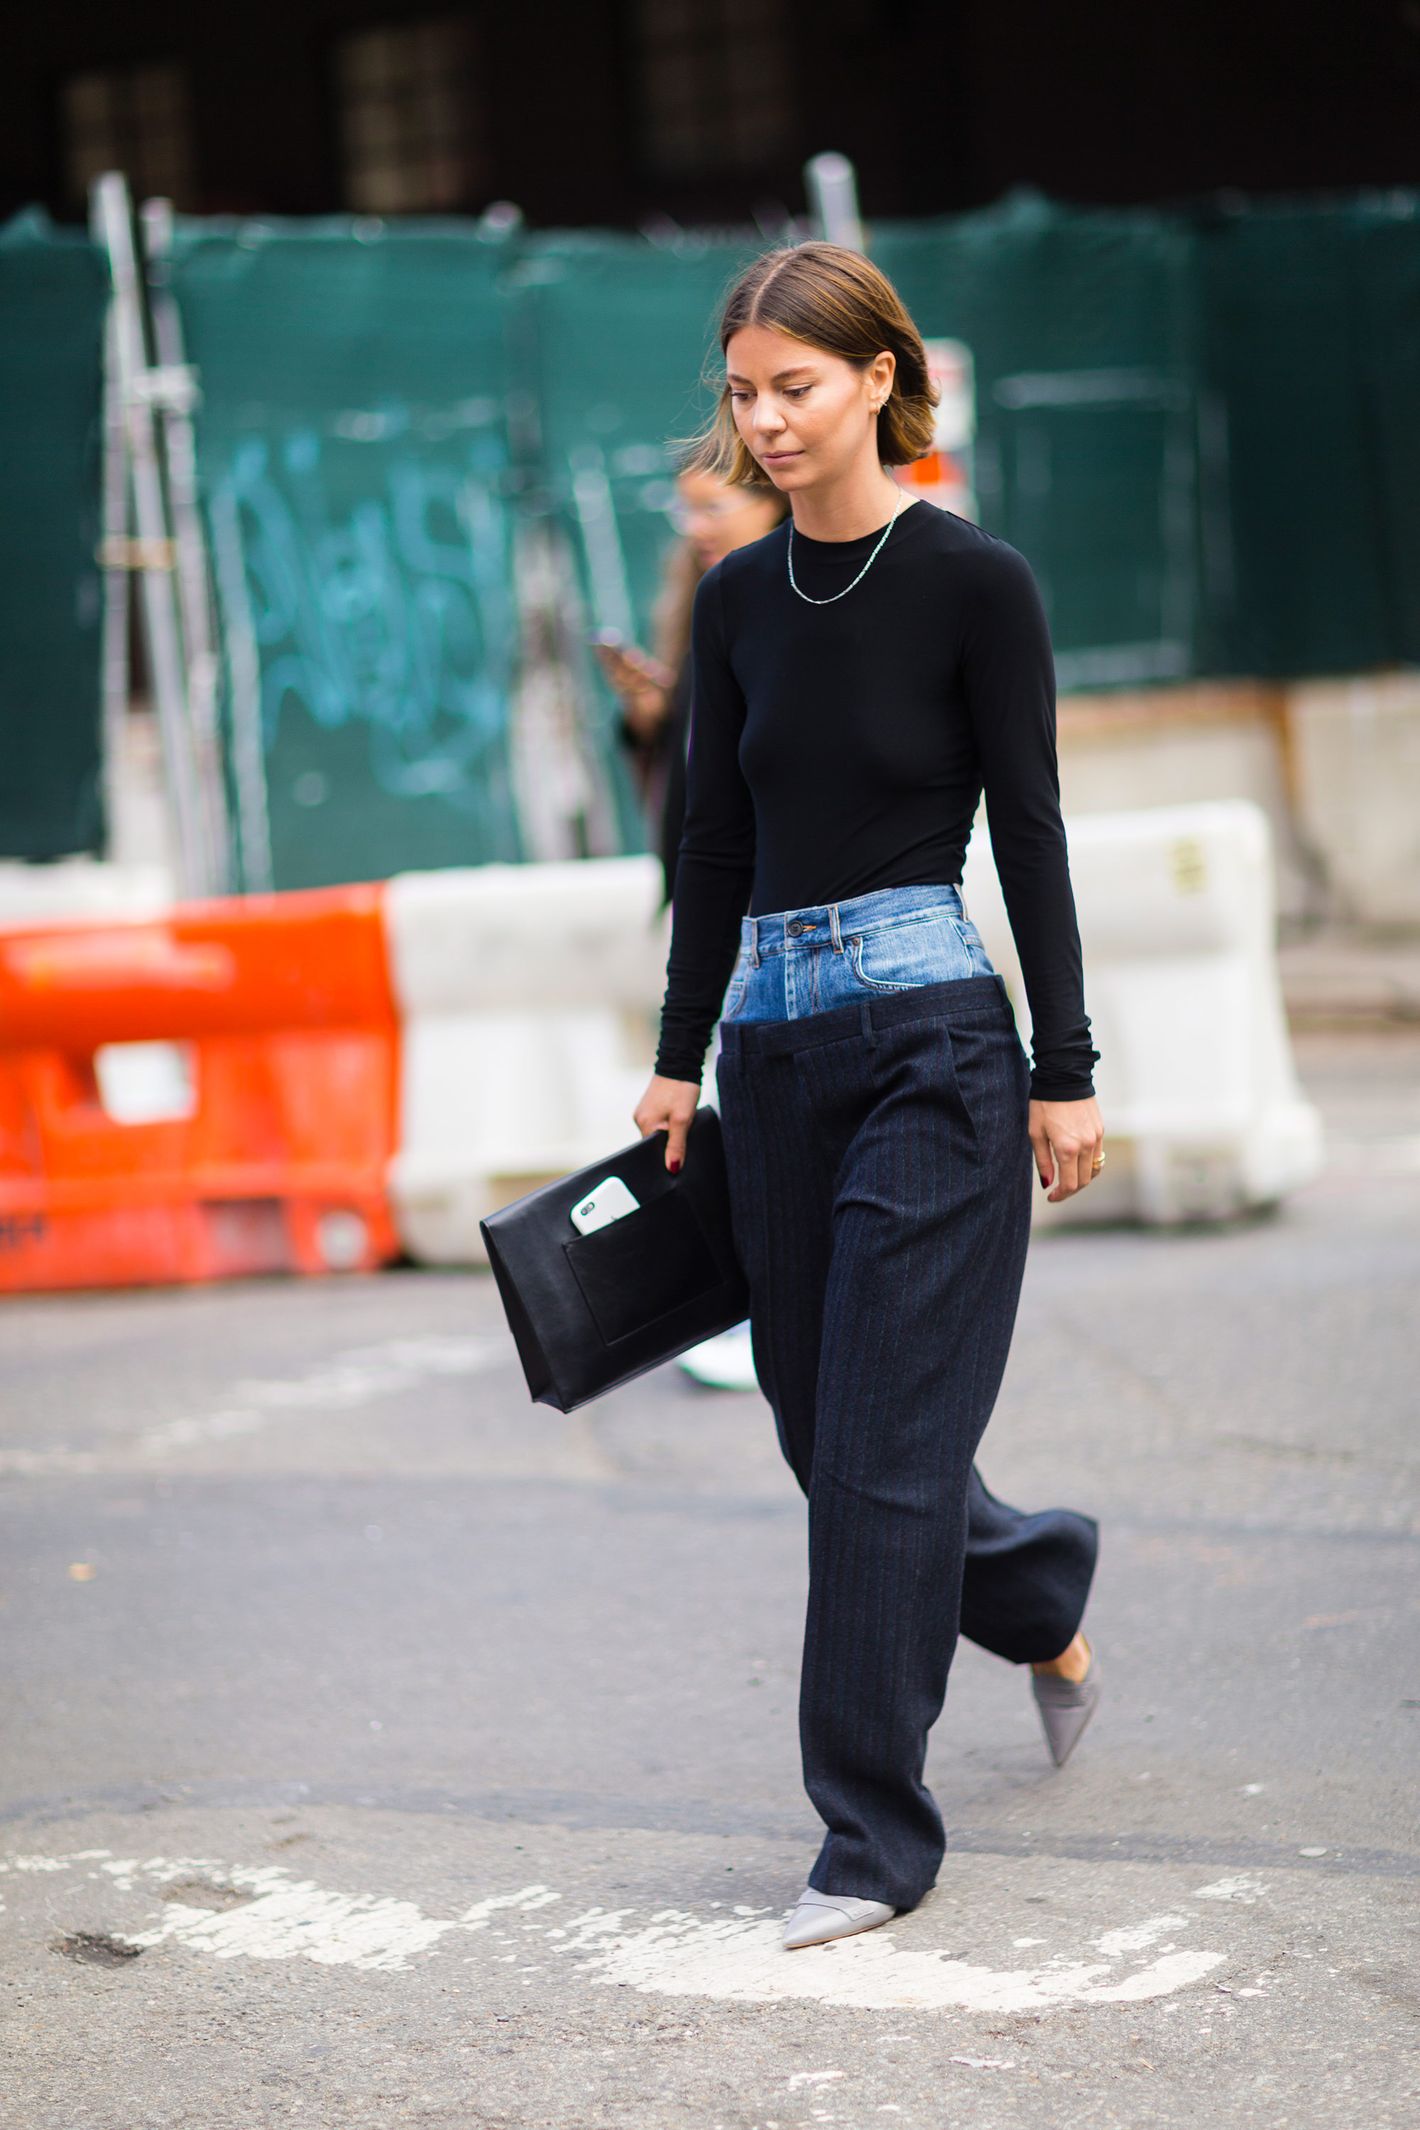 Soeverein kapsel paling Most Popular PFW Street Style Look: Margiela's Double Pants